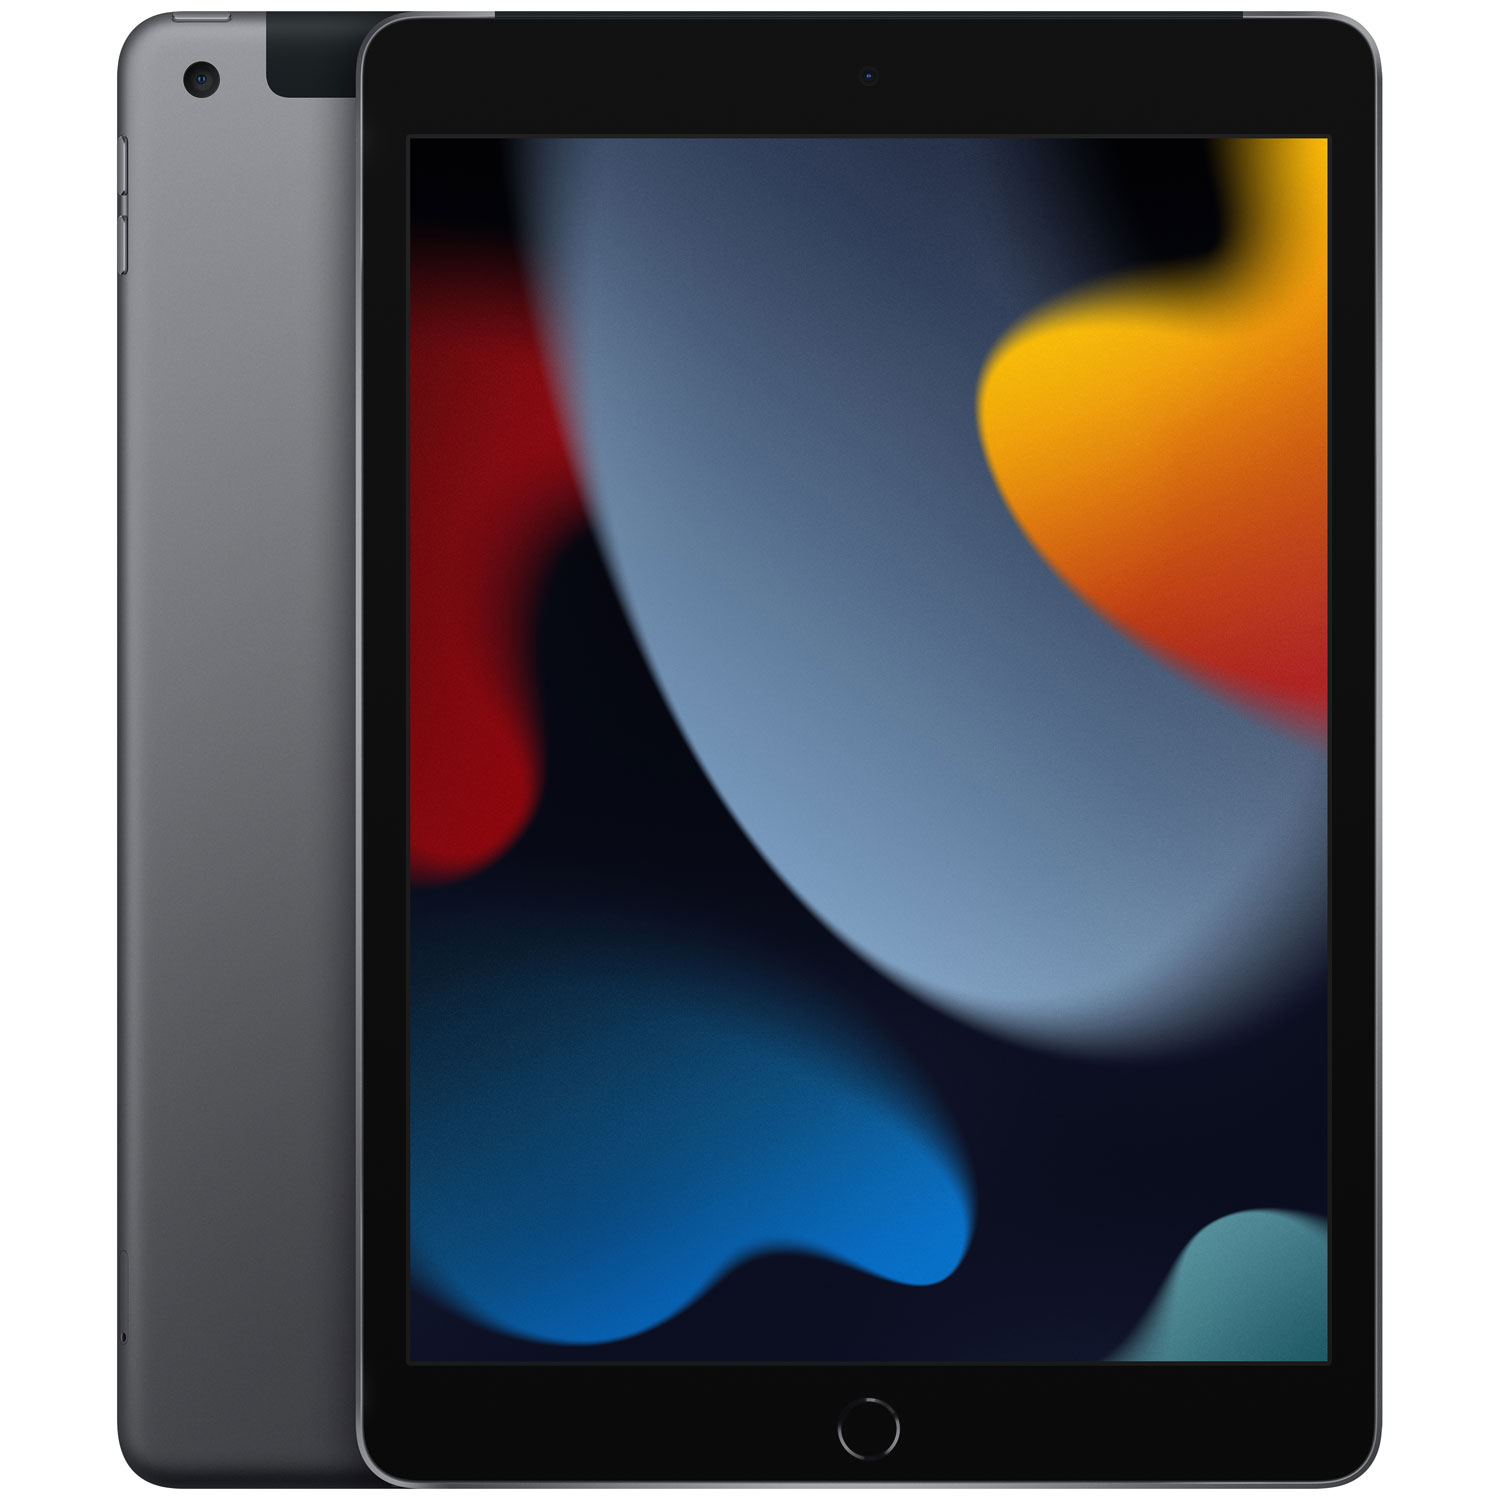 Apple iPad 10.2" 64GB with Wi-Fi & 4G LTE (9th Generation) - Space Grey